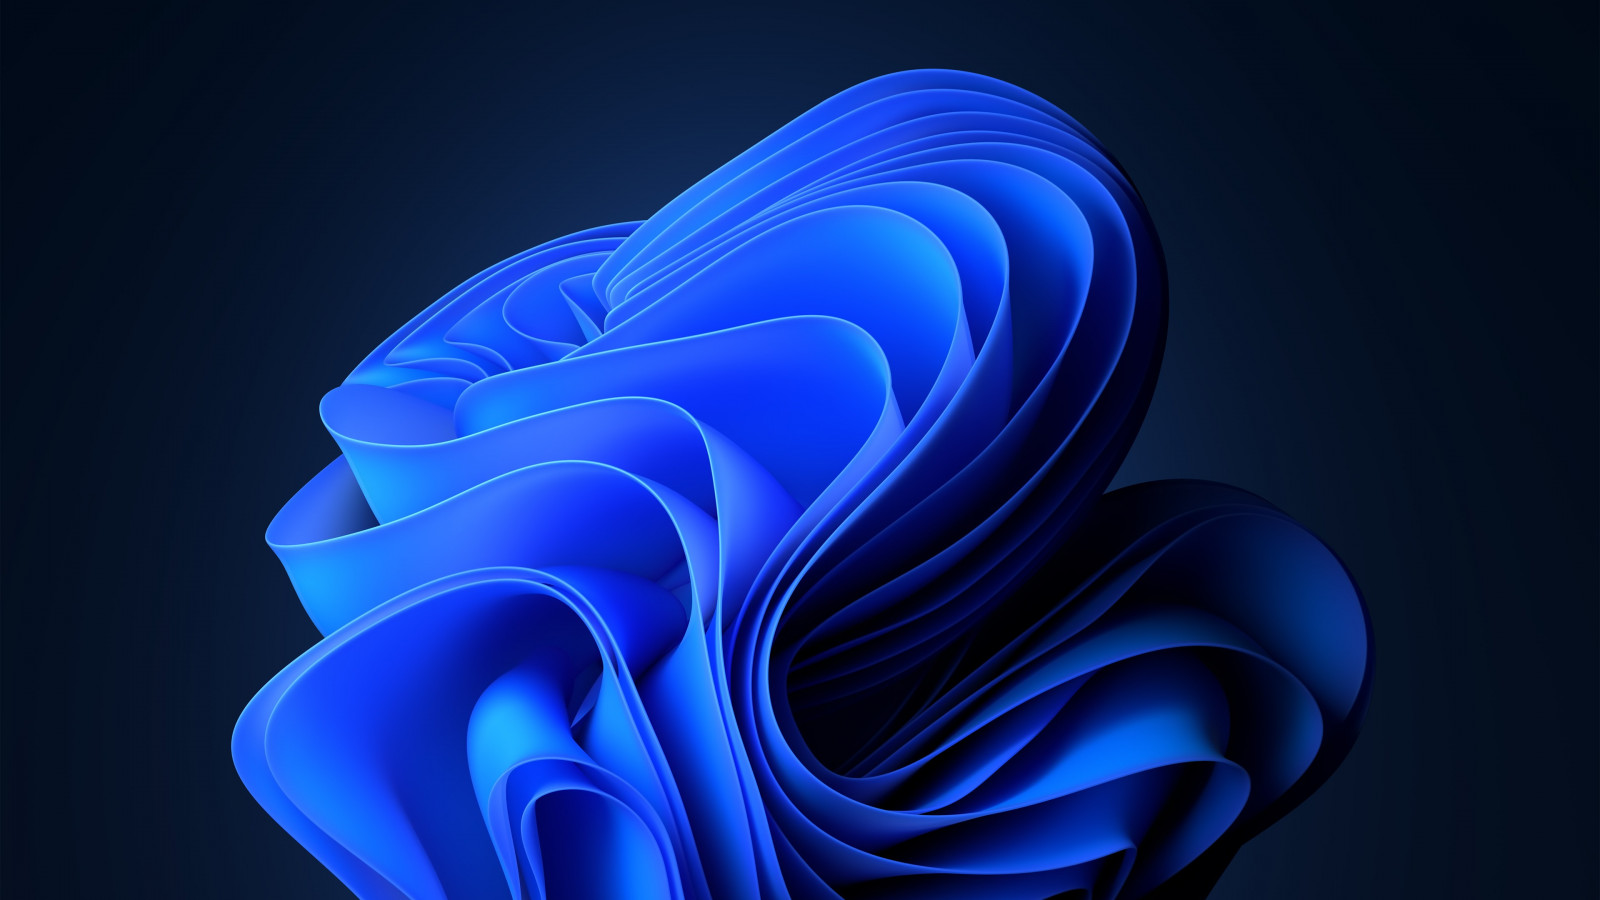 Windows 11 blue abstract wallpaper 1600x900